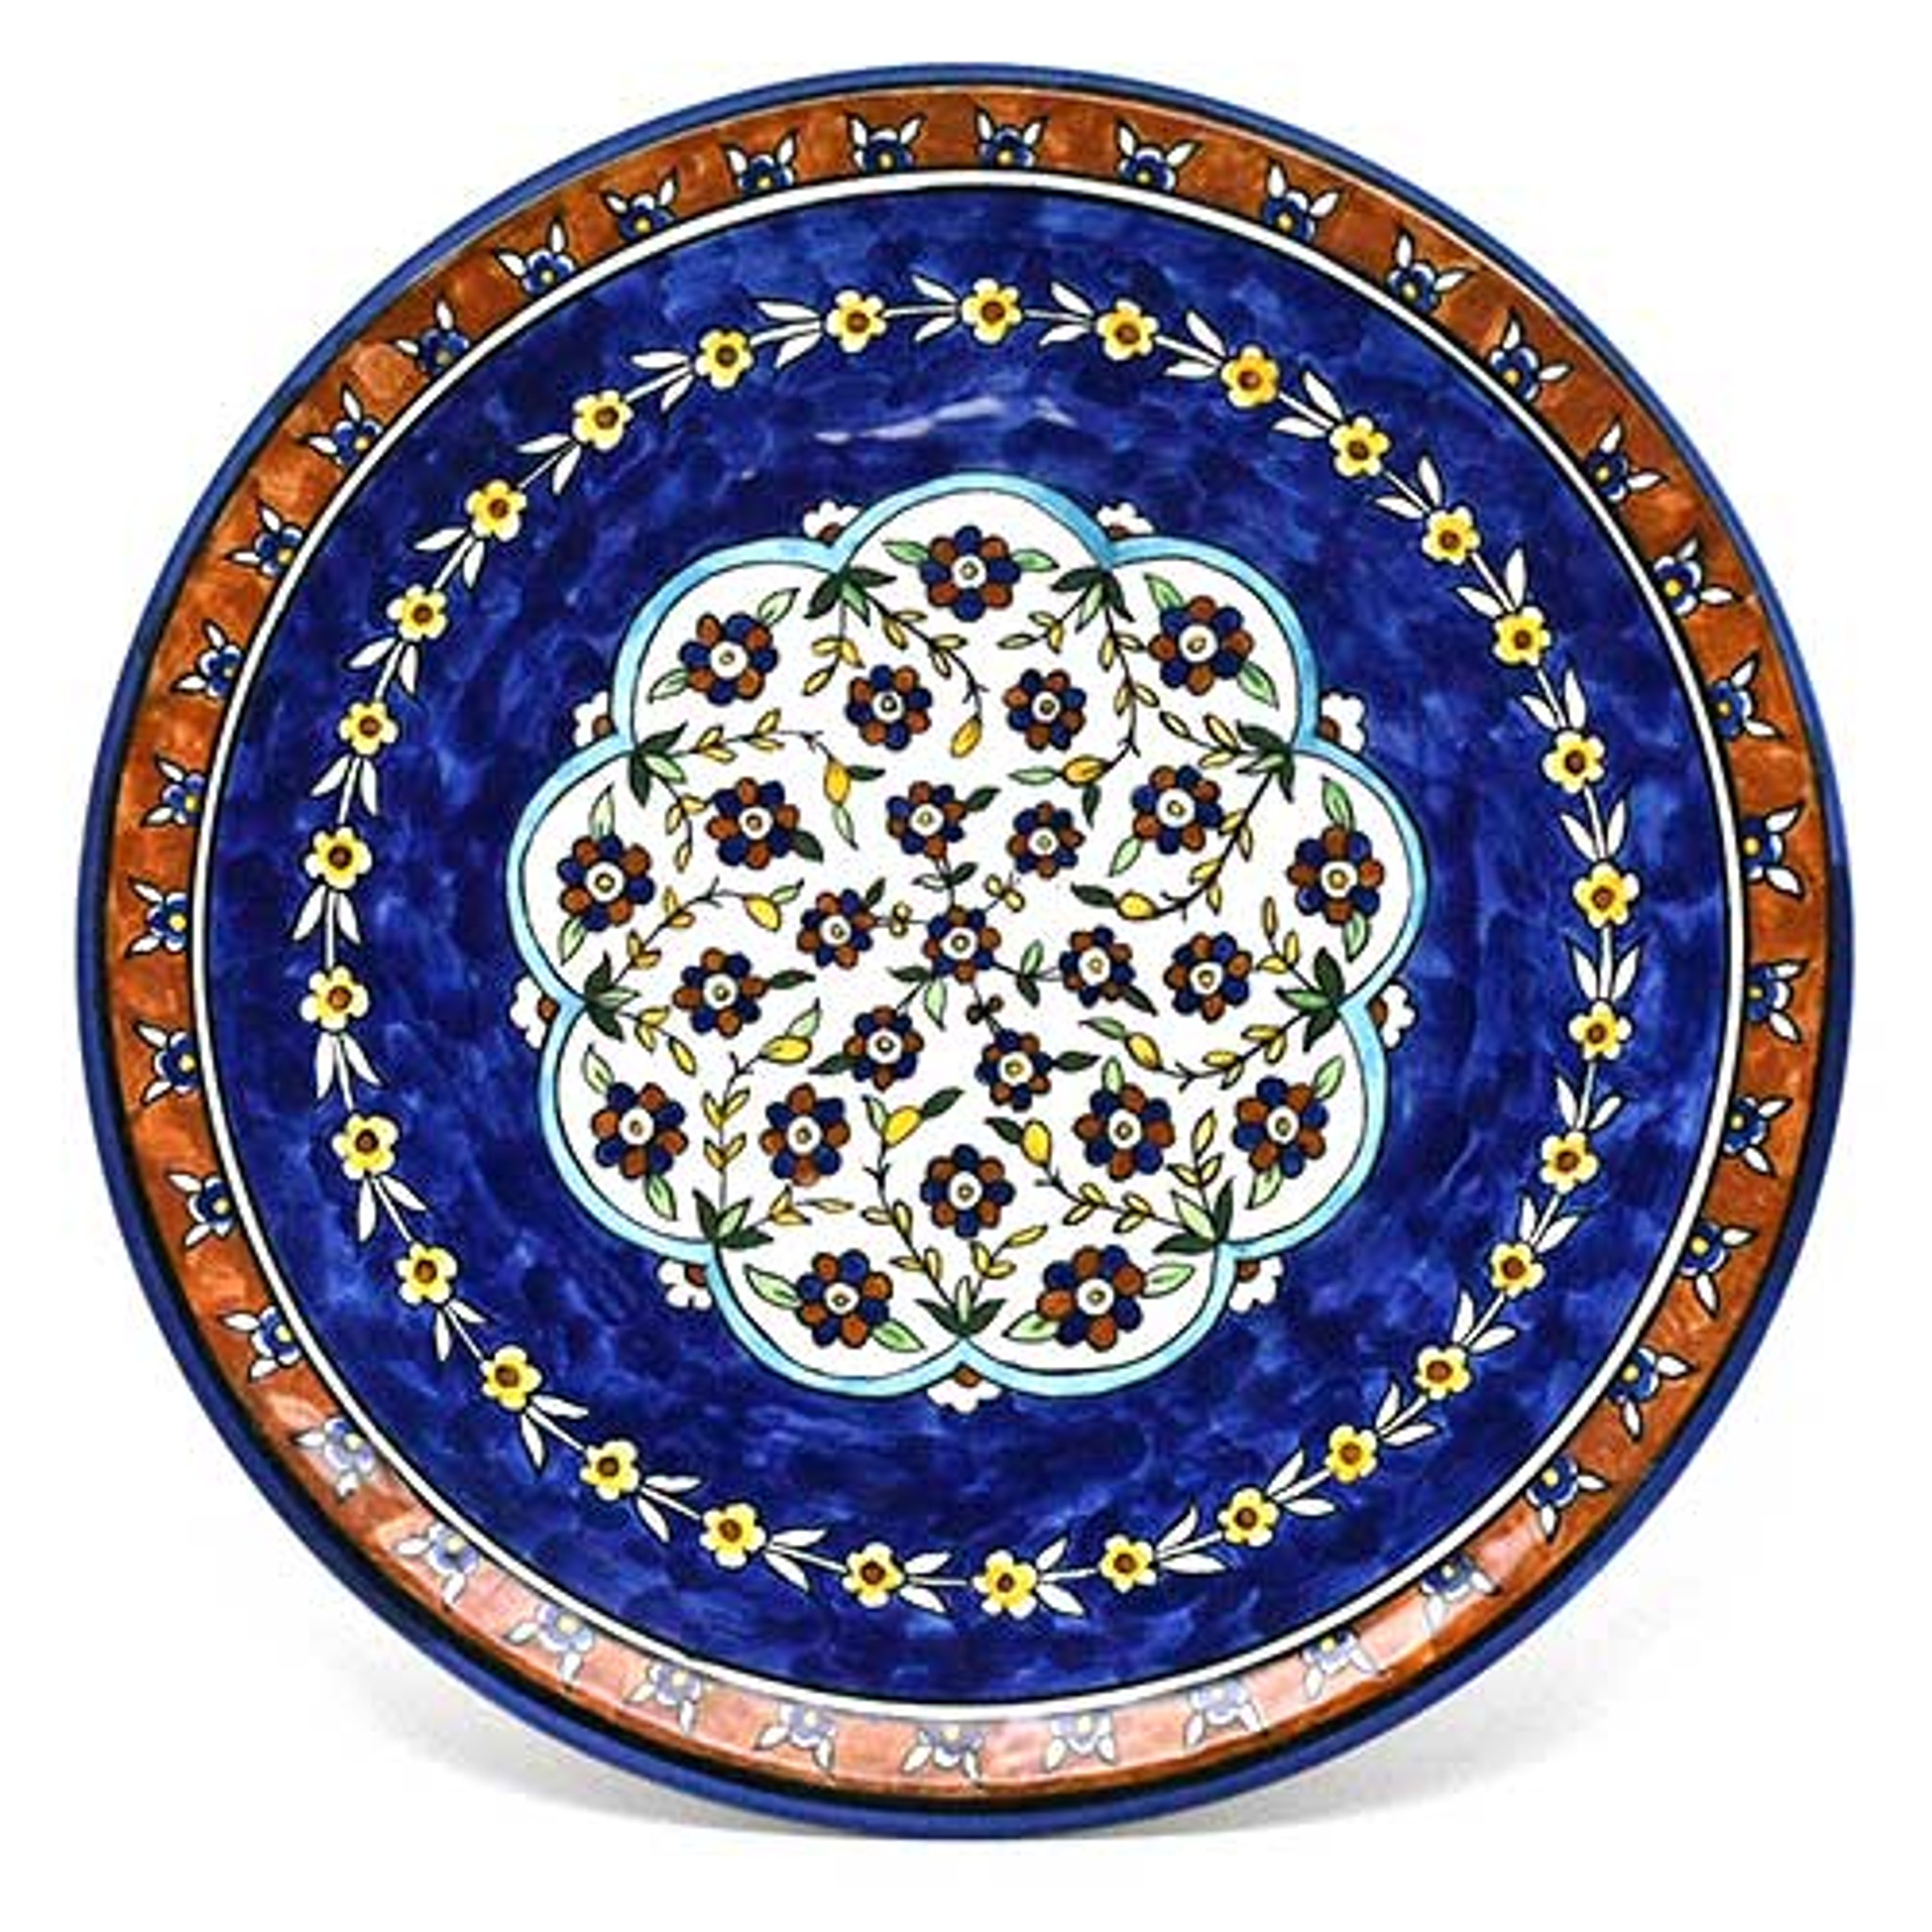 Jerusalem flowers blue plate